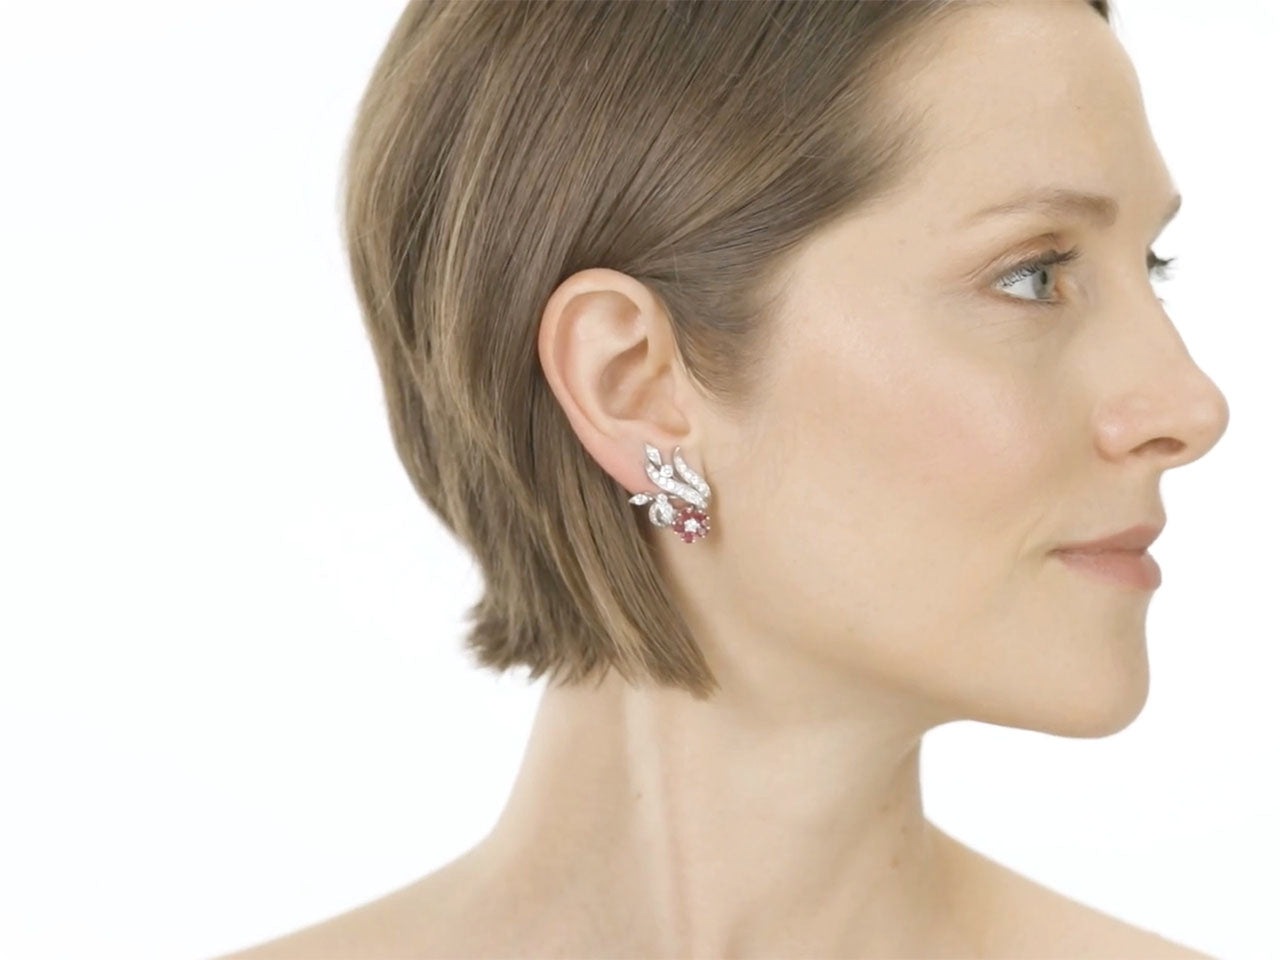 Mid-Century Ruby and Diamond Flower Earrings in Platinum